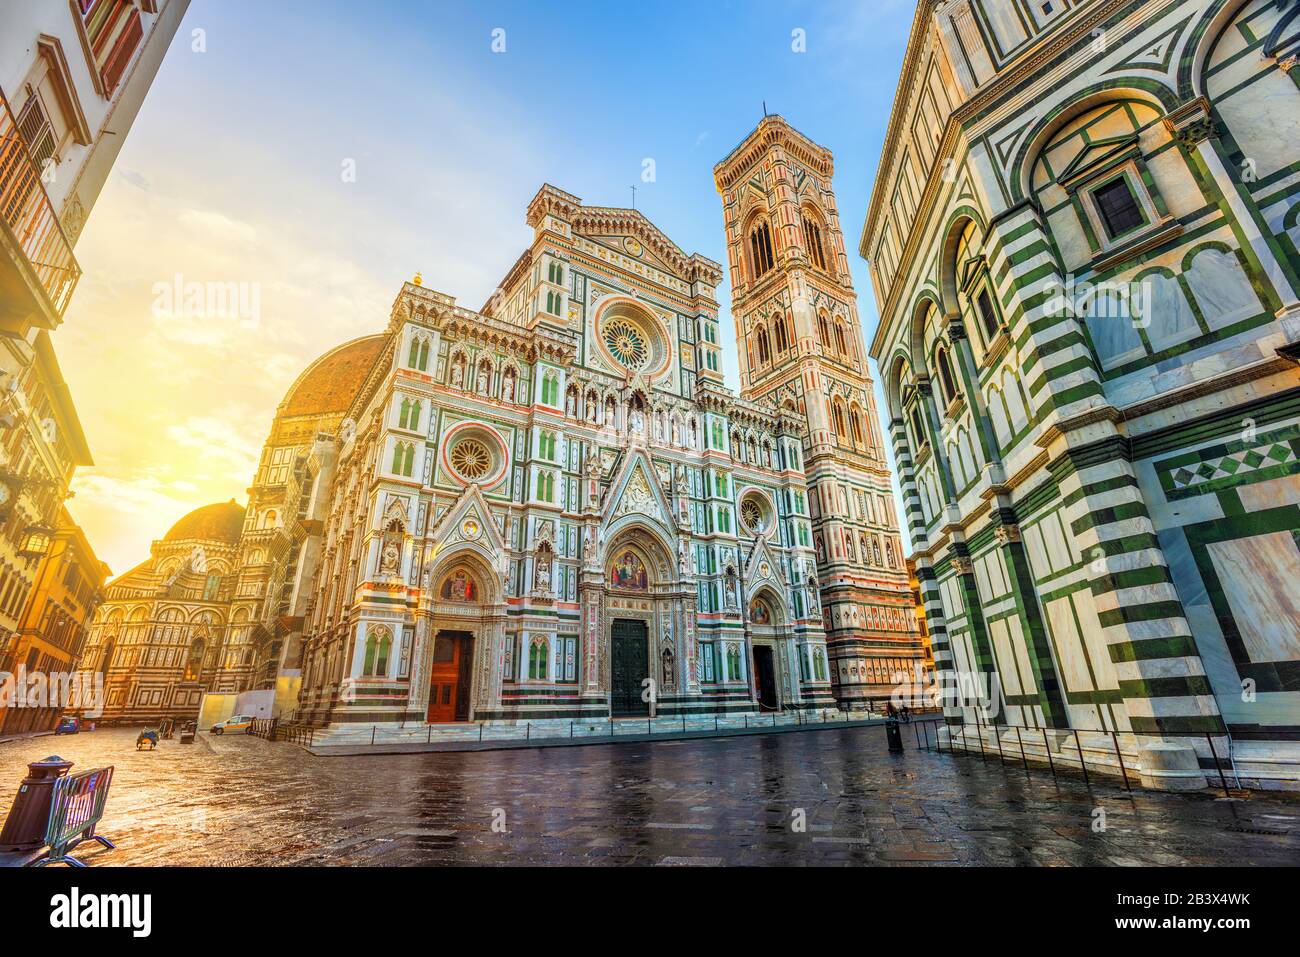 Cathedral of Santa Maria del Fiore with Brunelleschi's Dome, Giotto's Campanile and Baptisterium in Piazza del Duomo, Florence, Italy, in dramatic sun Stock Photo